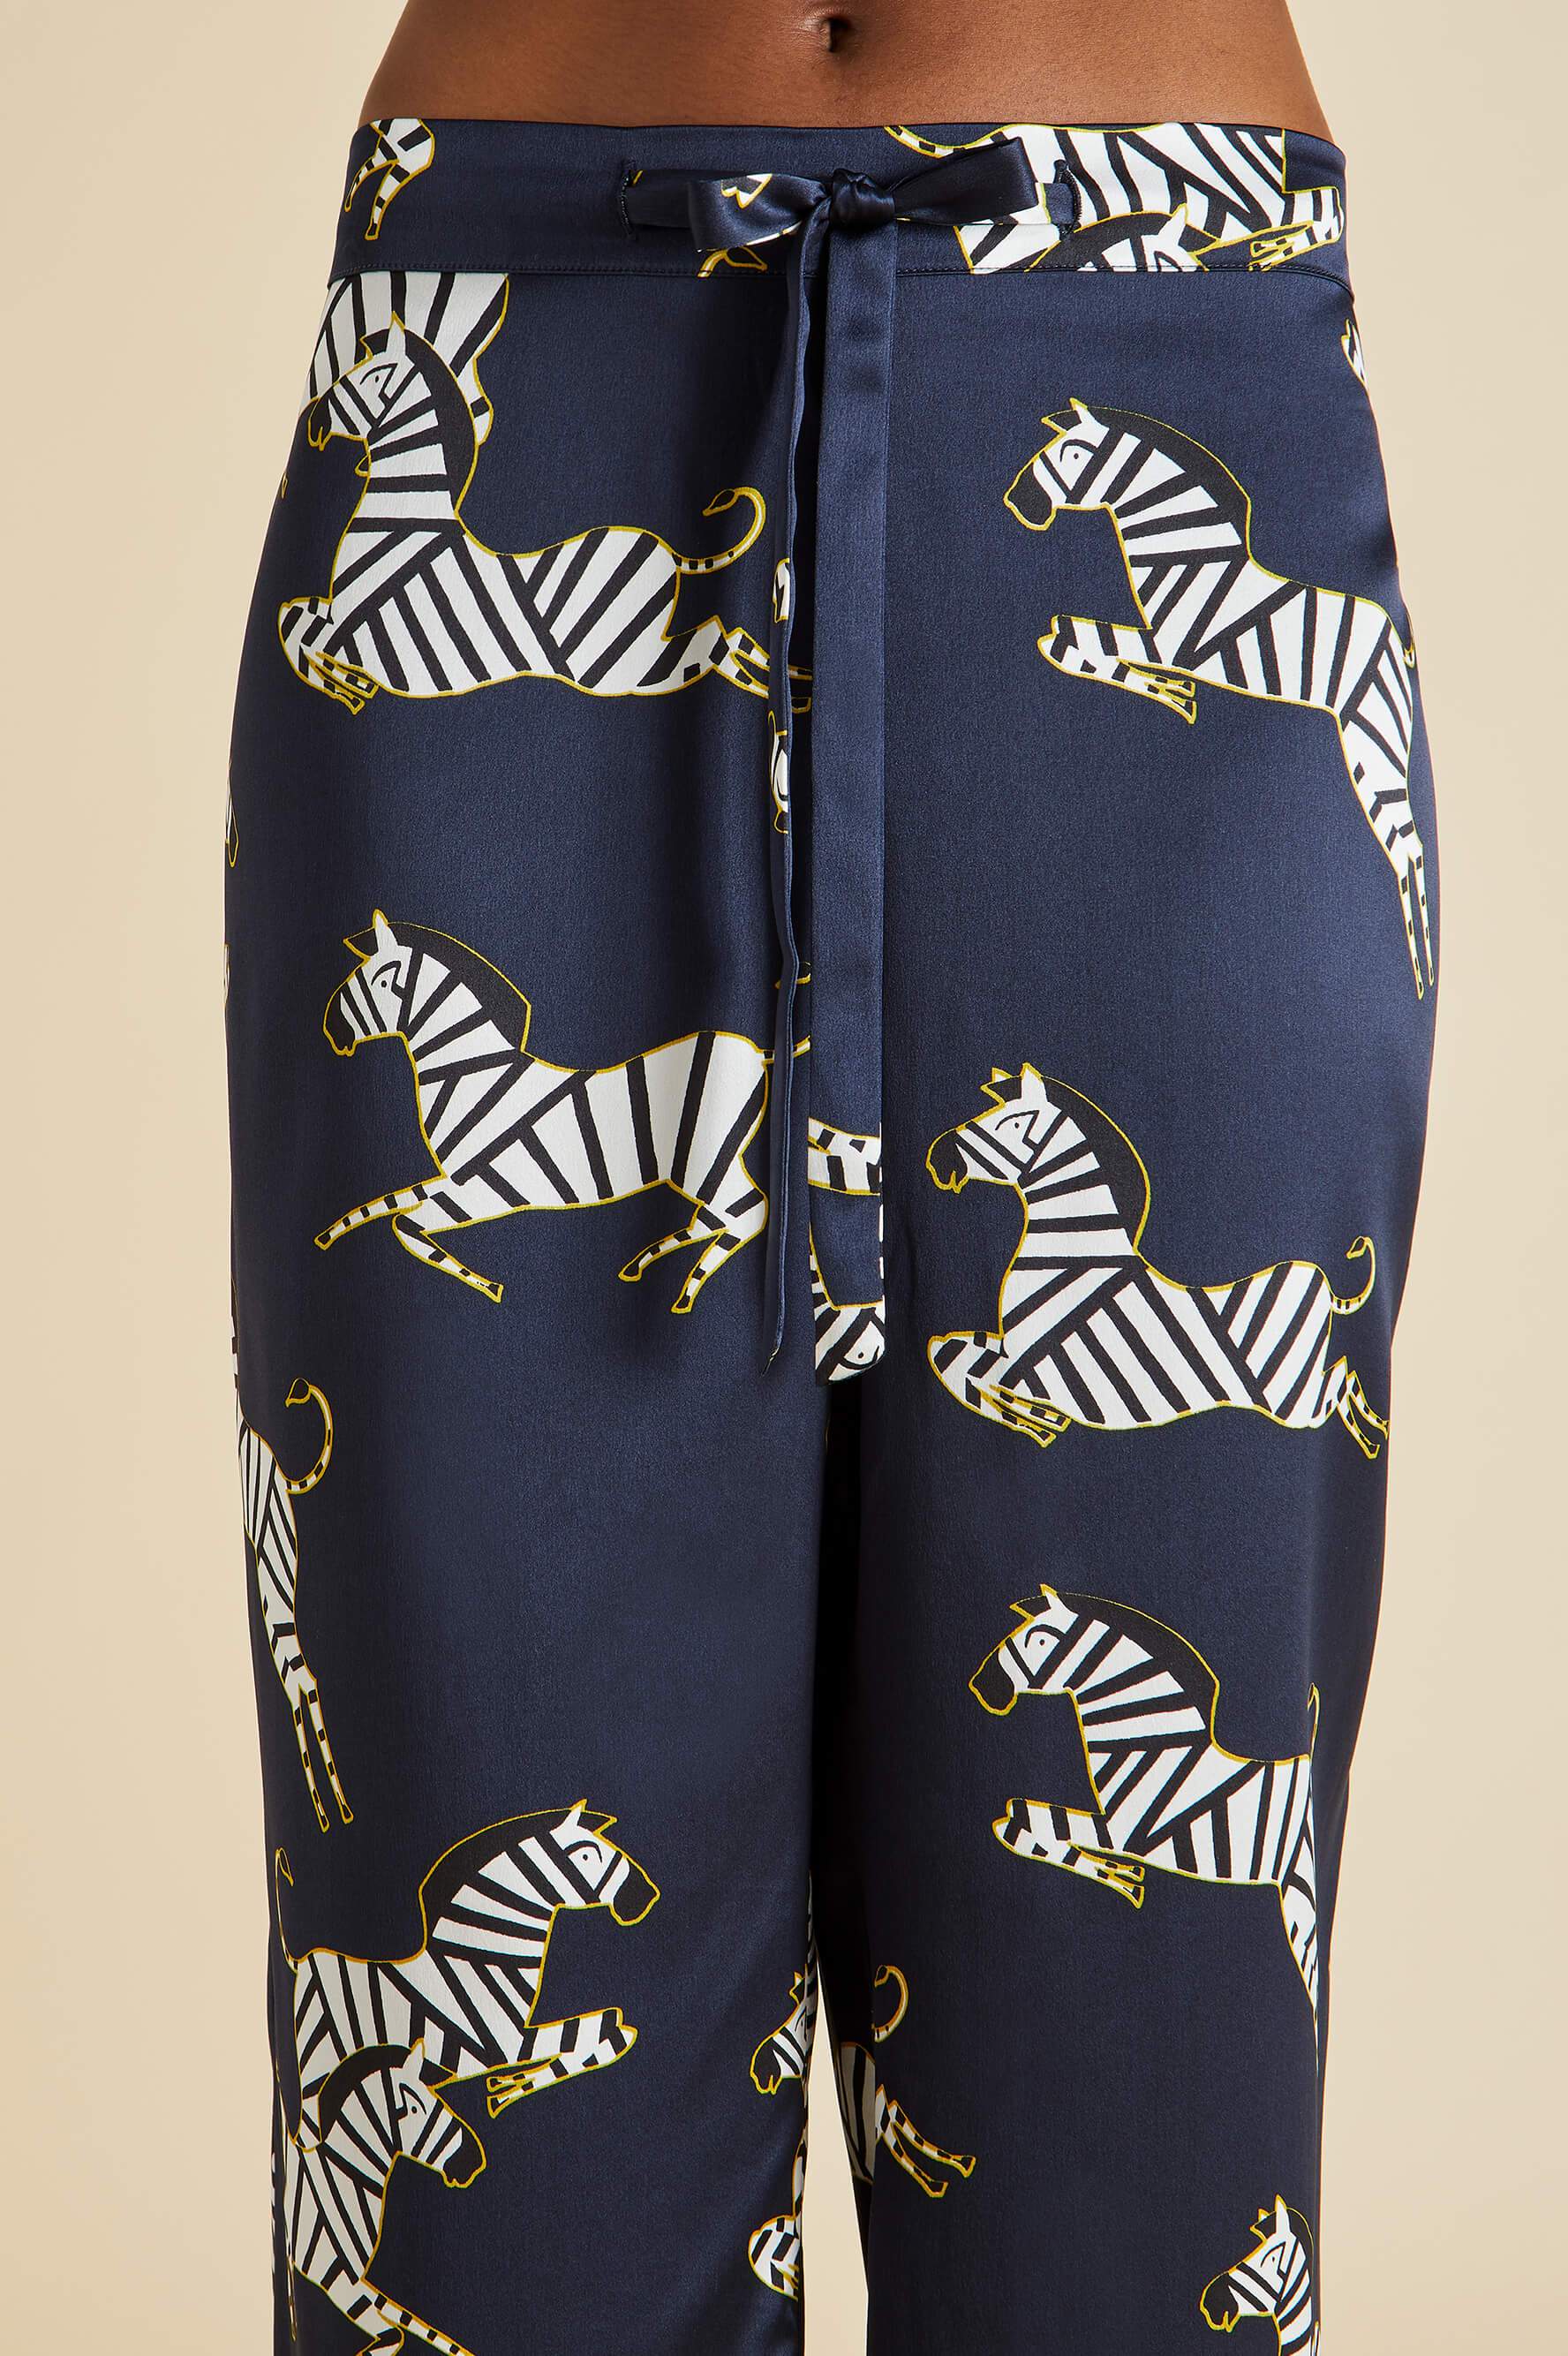 The Lila Zizi  Olivia von Halle Navy Zebra Printed Luxury Silk Pajama Set